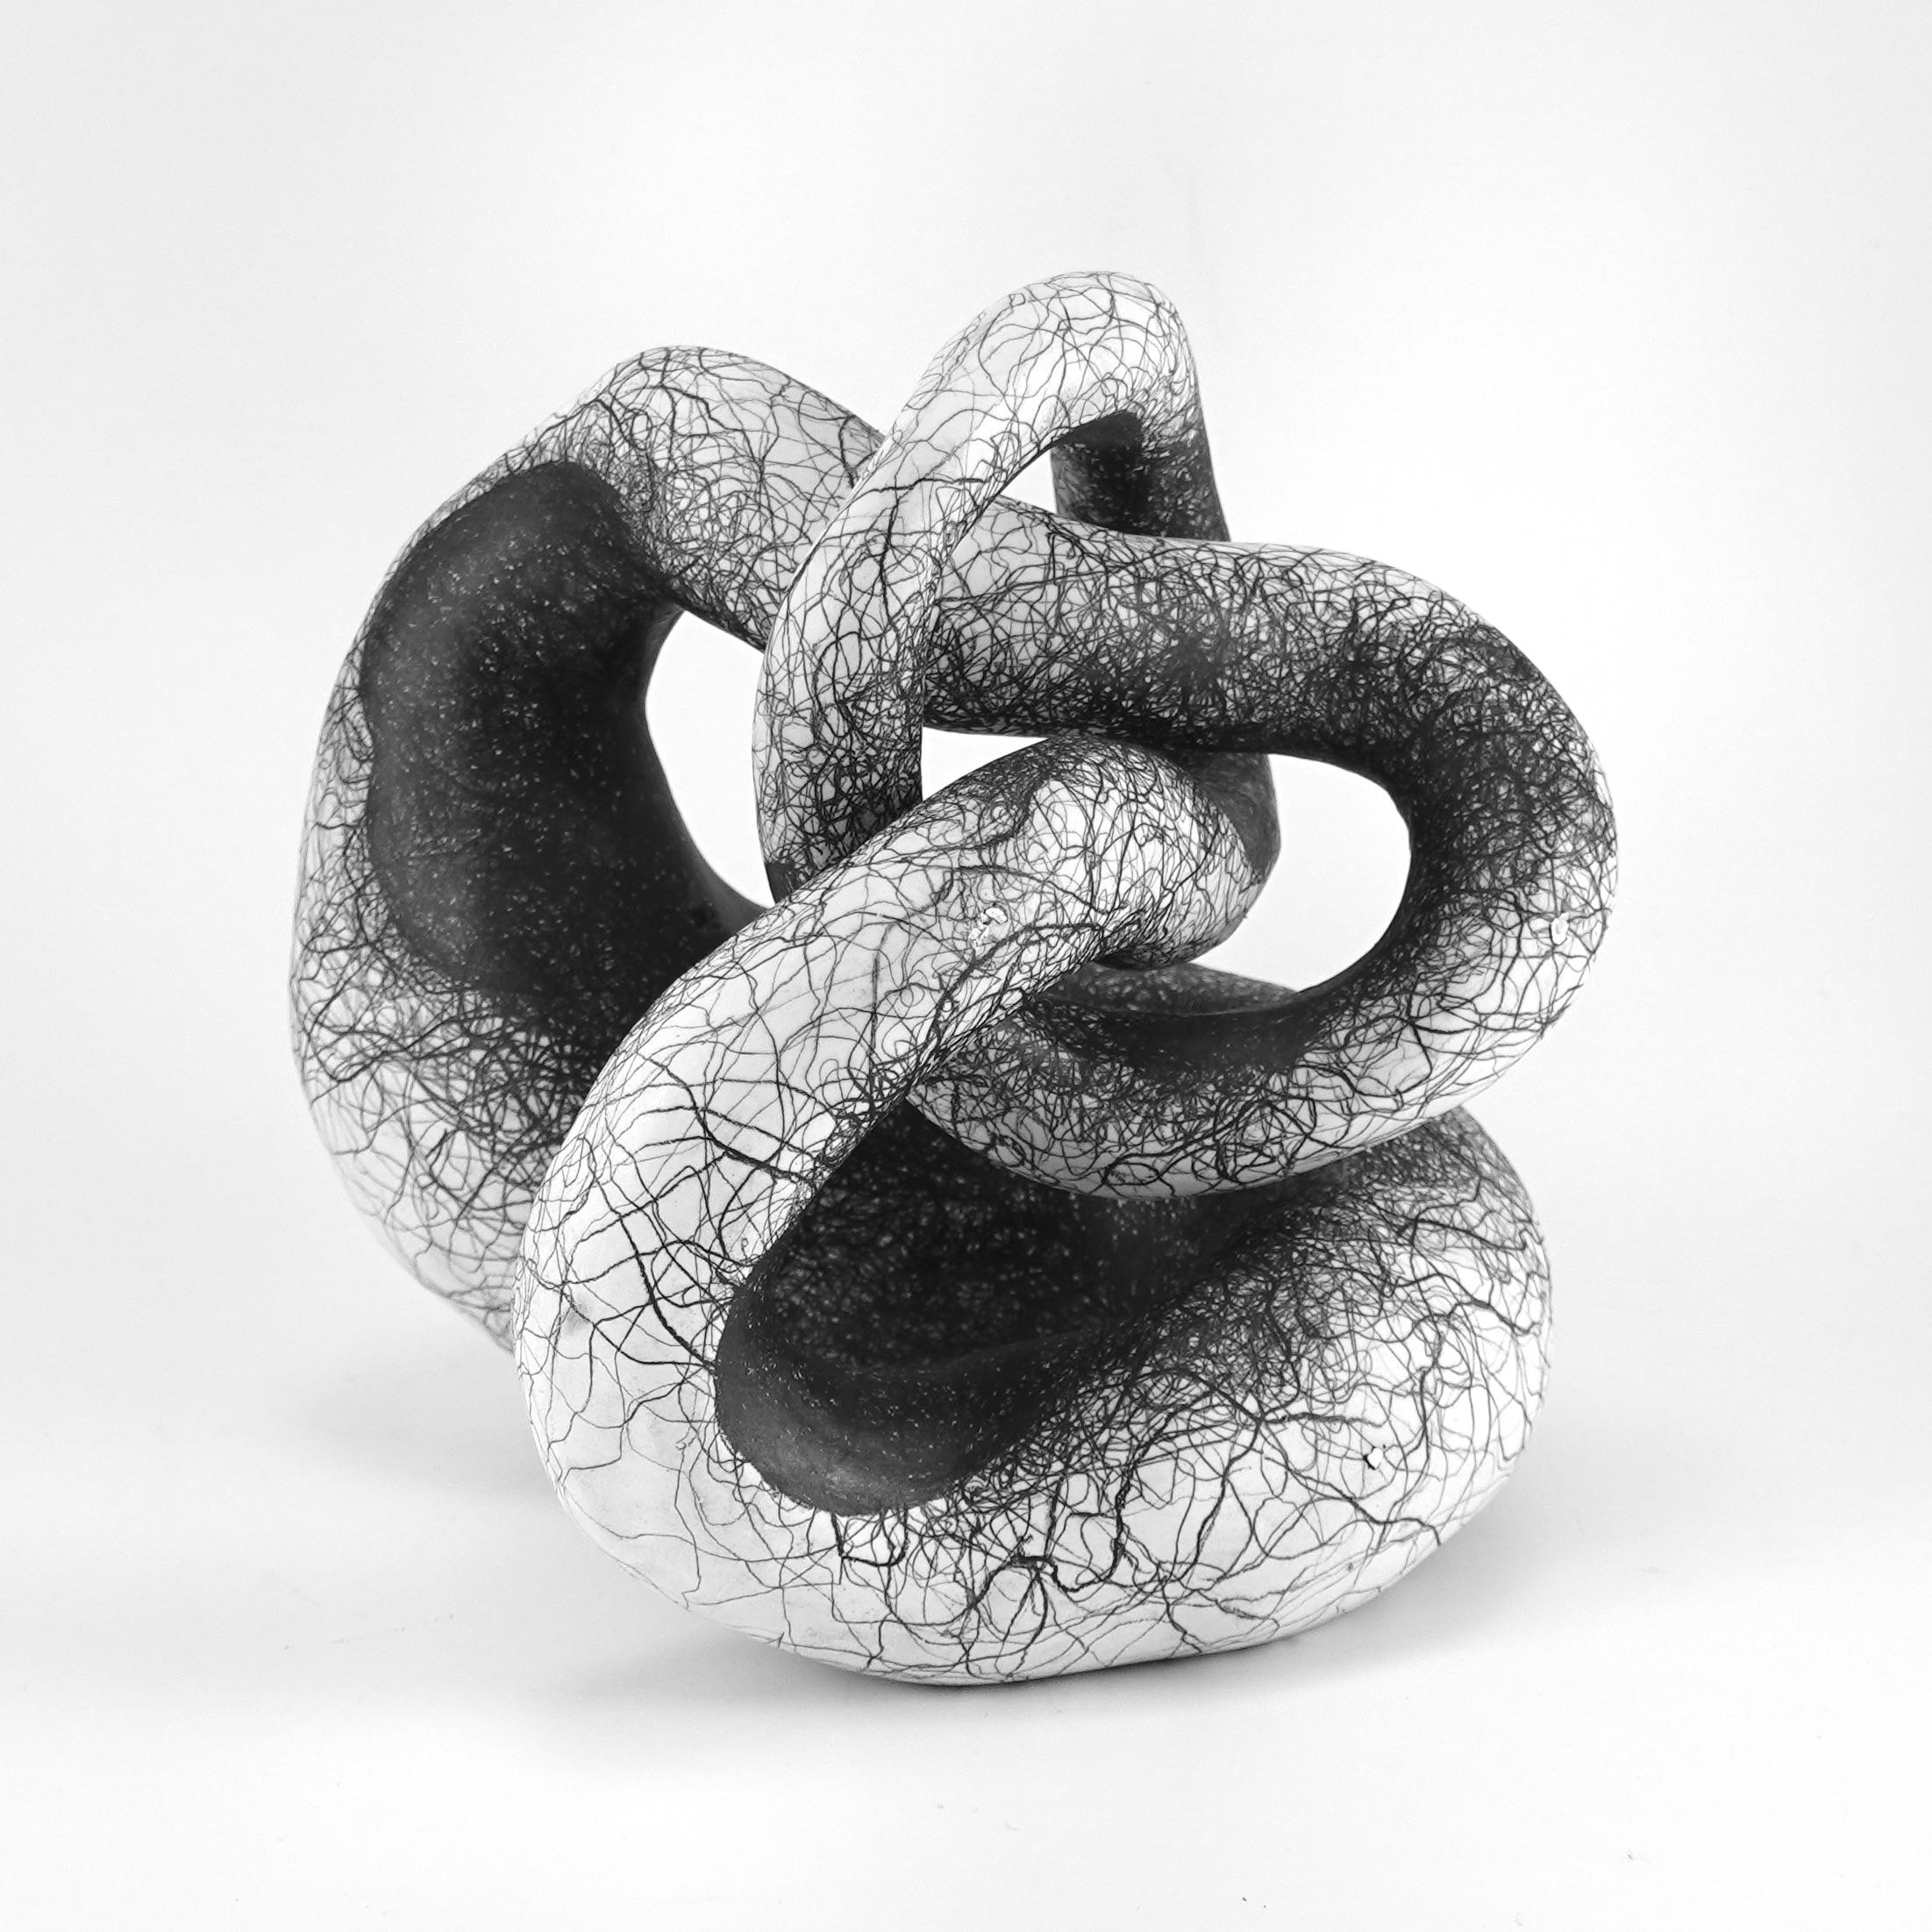 Abstract Sculpture Judi Tavill - Sculpture abstraite minimale en noir et blanc : "ENTWIX".